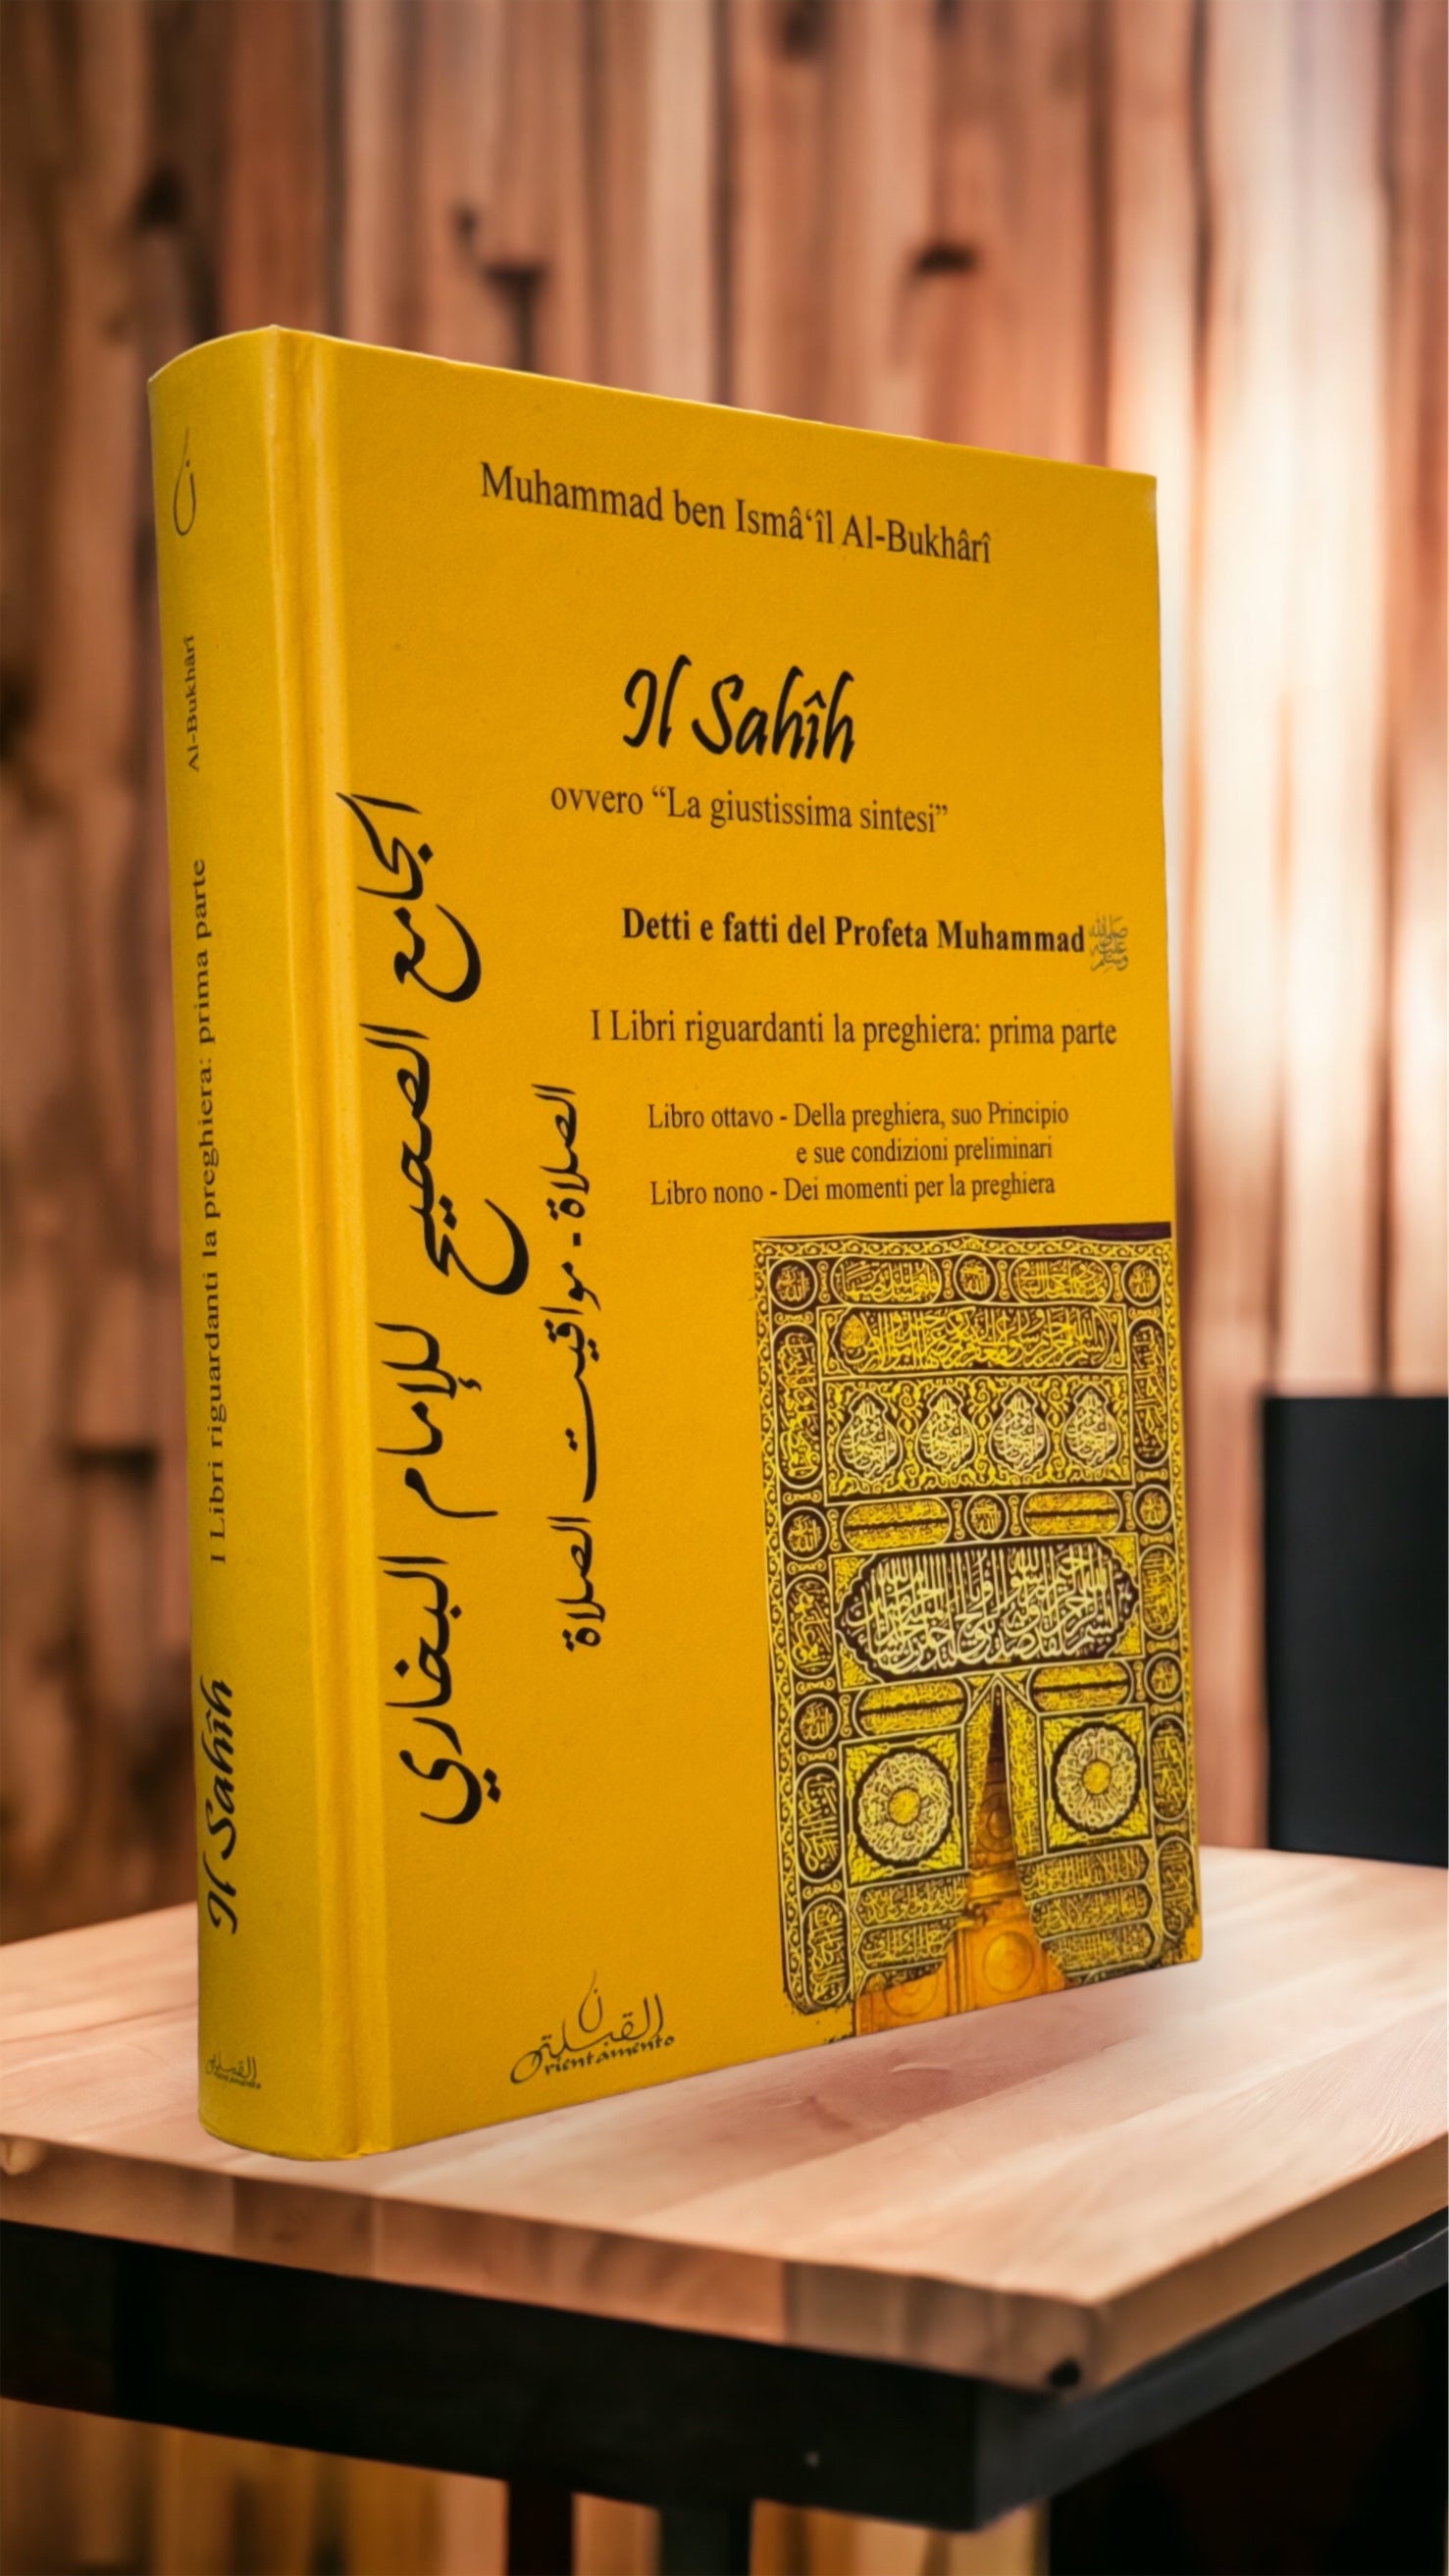 Sahih al-Bukhârî: I Libri riguardanti la preghiera (I) - Hijab Paradise - della preghiera - i momenti della preghiera - libro illustrativo sulla preghiera